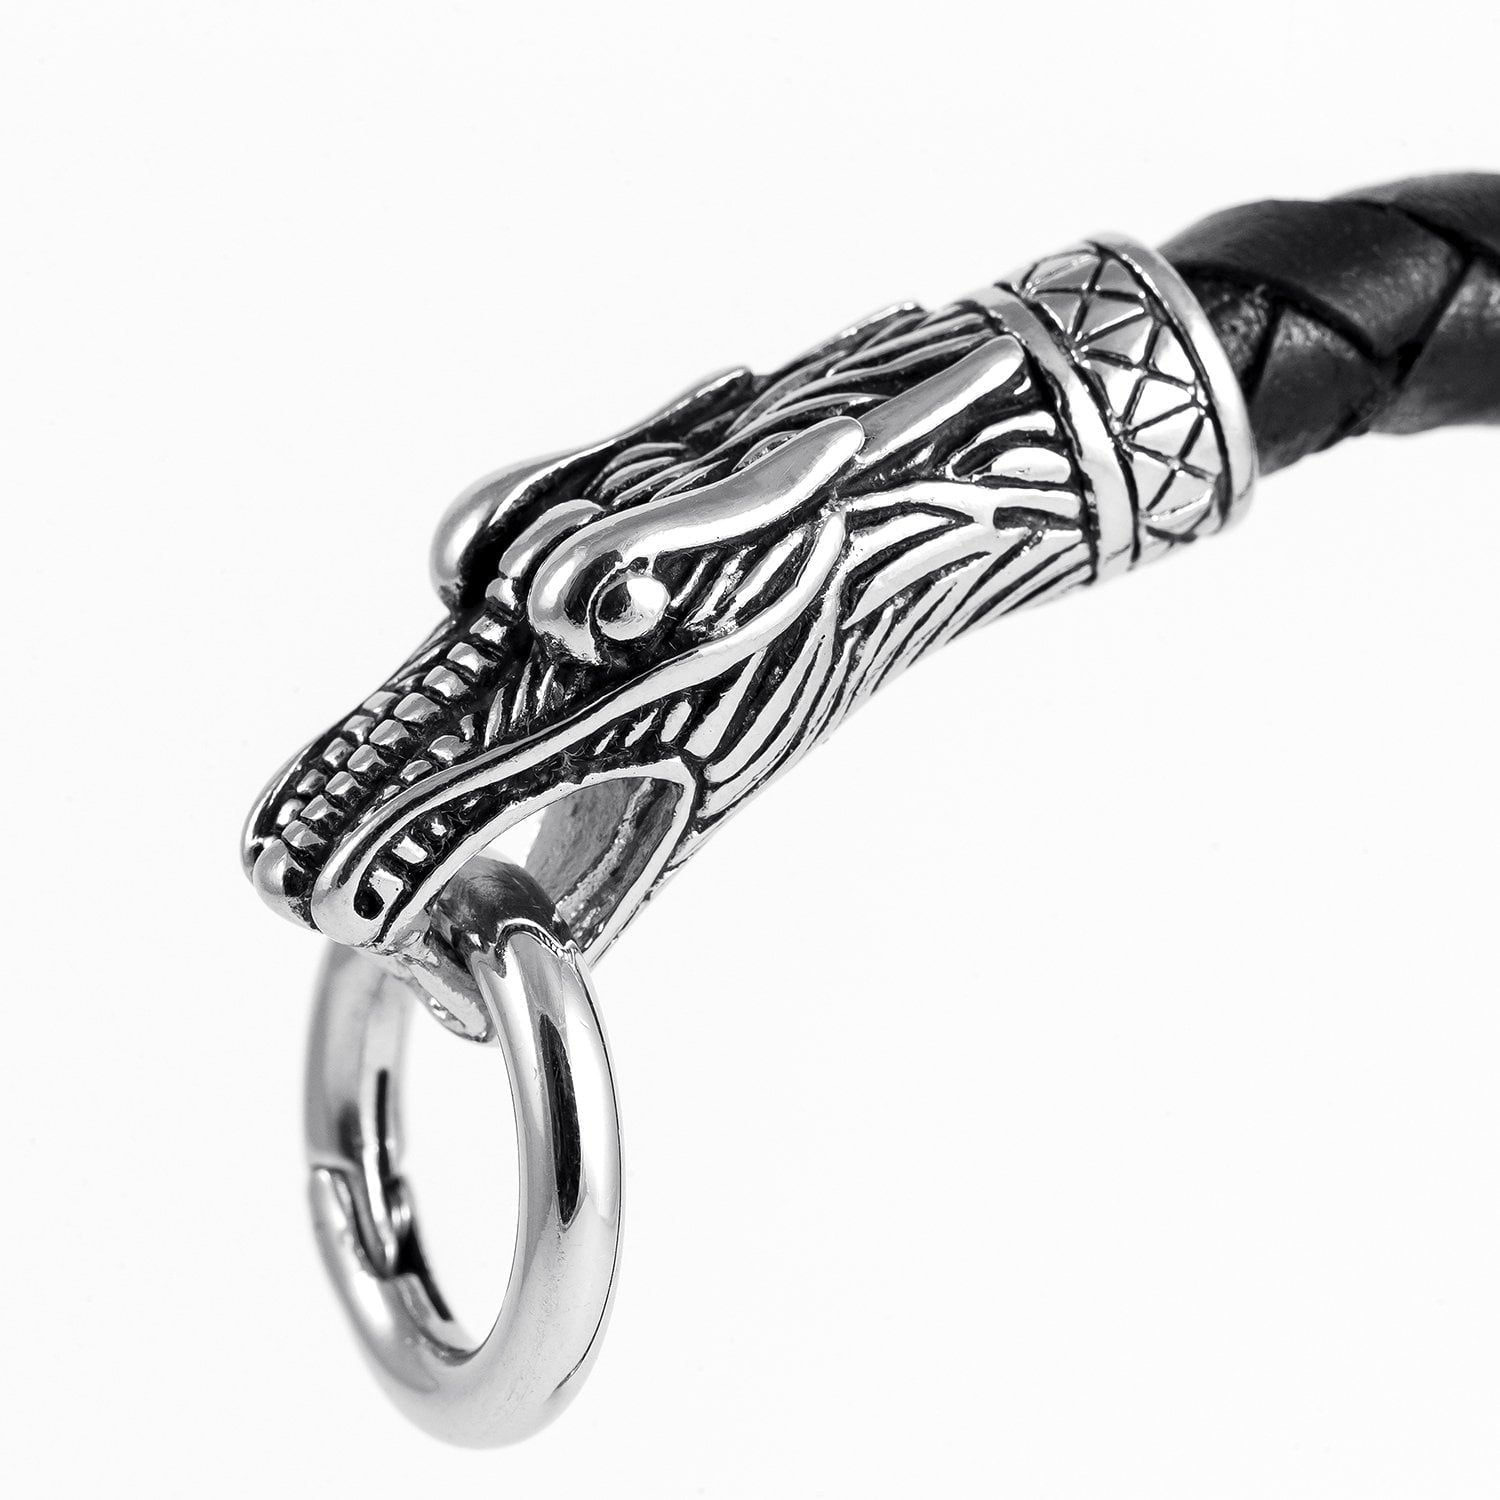 Stainless Steel Viking Jormungand with Braided Leather Bracelet - SilverMania925